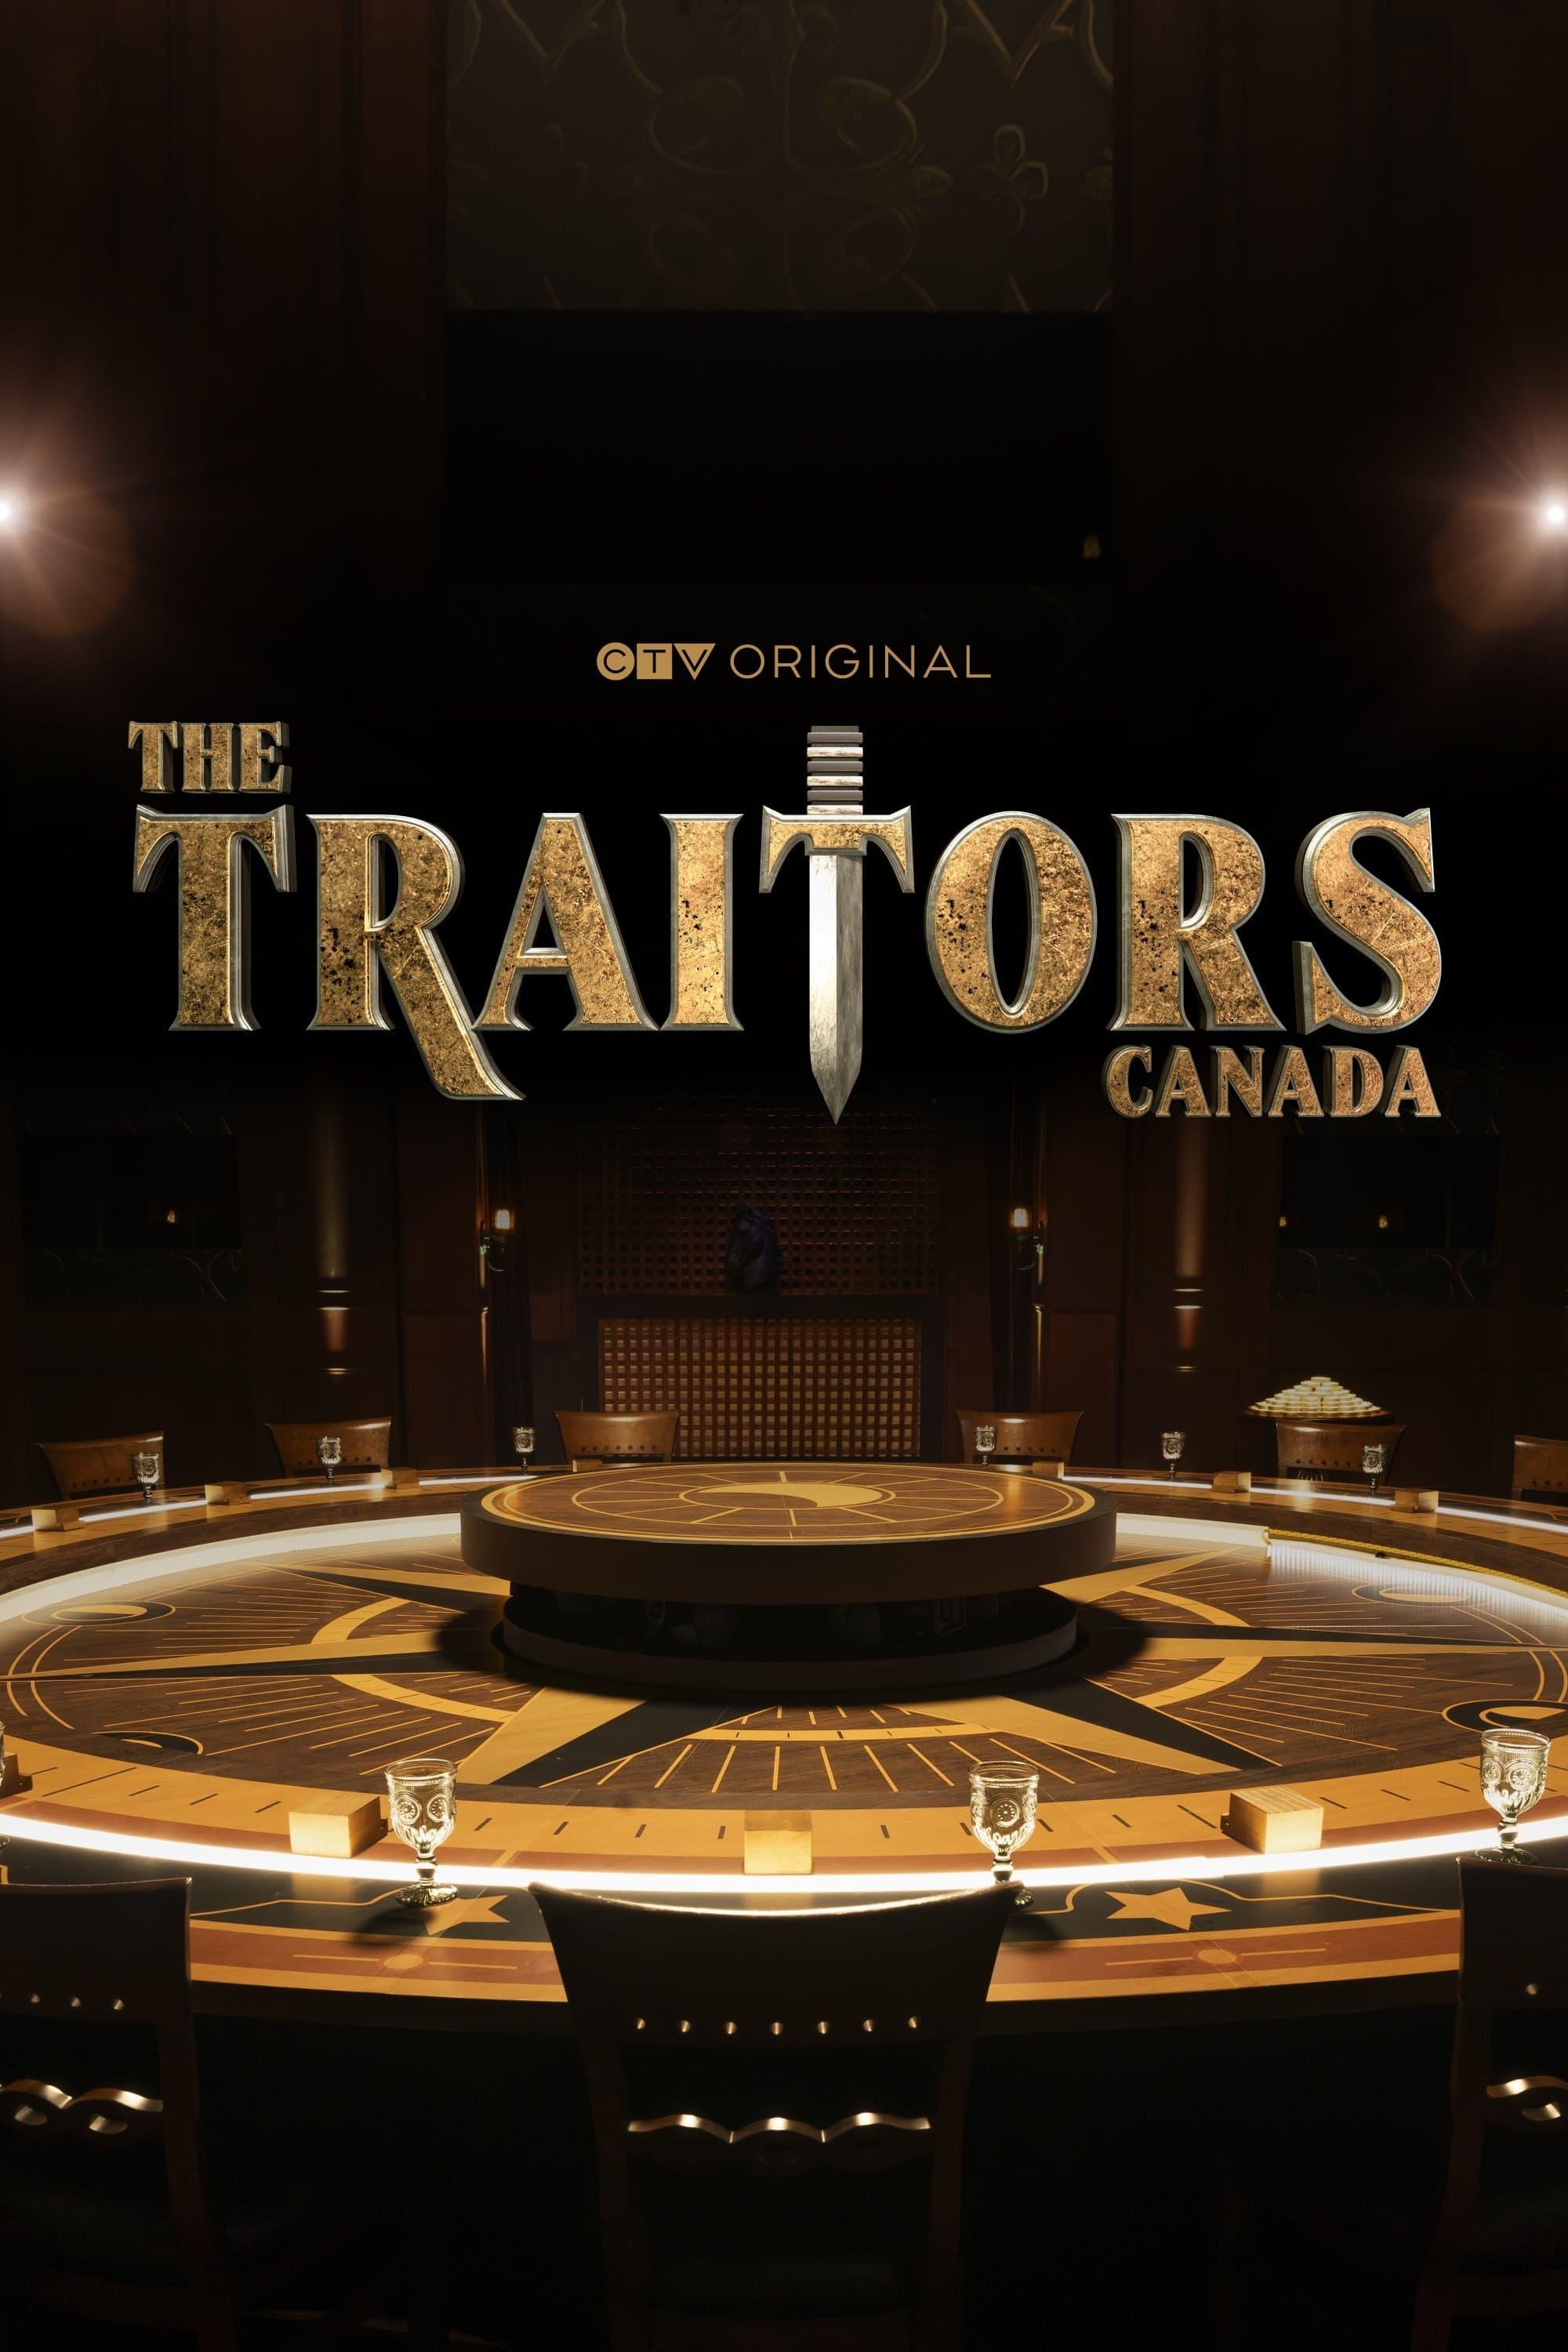 The Traitors Canada poster